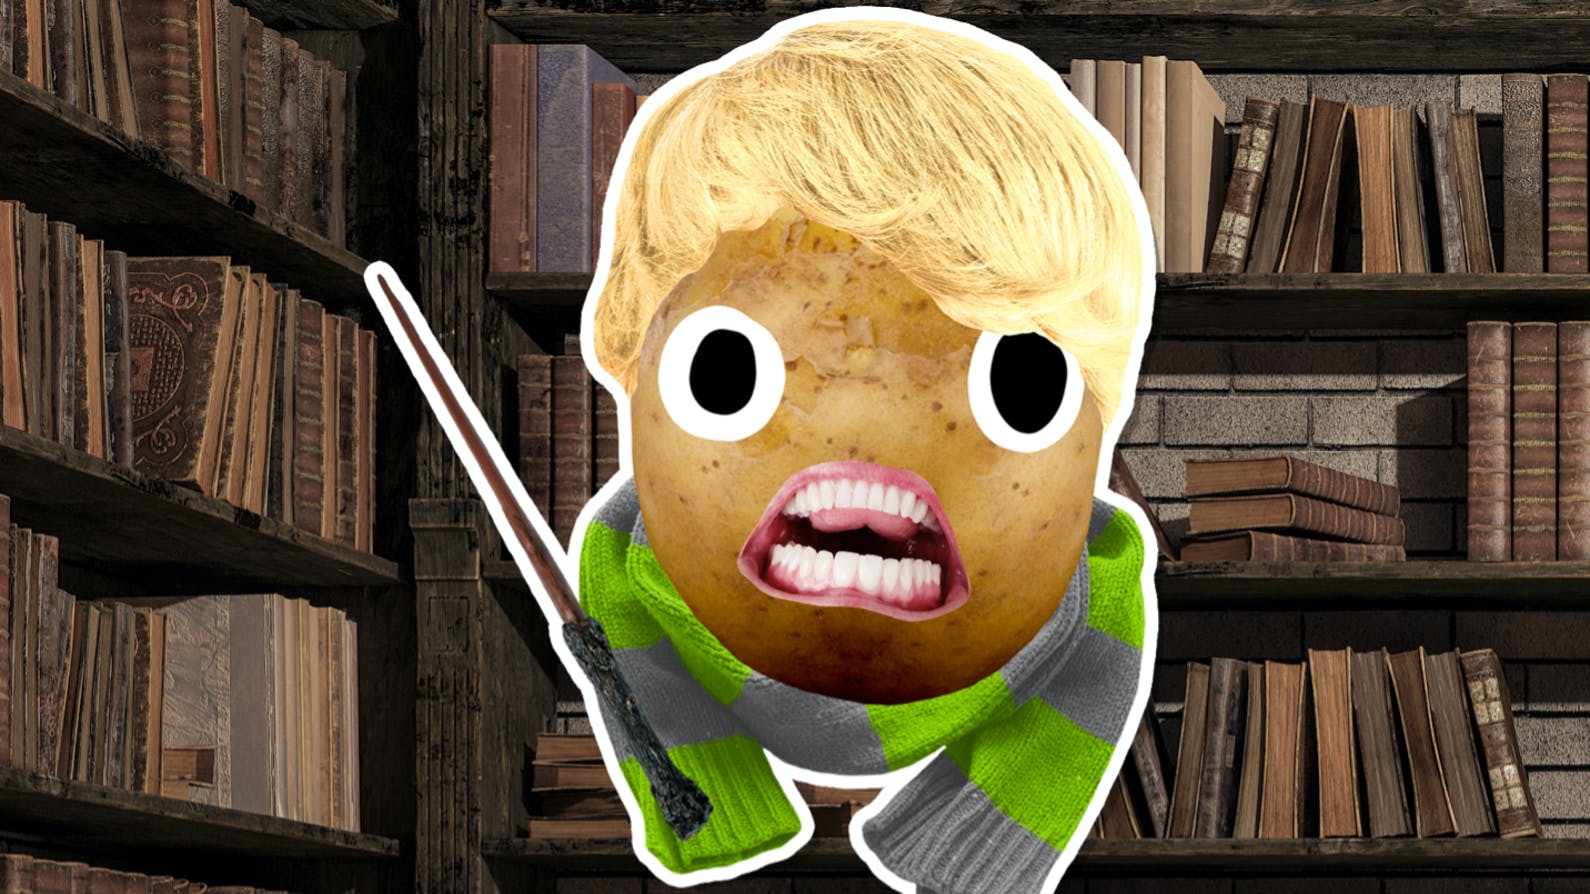 A potato dressed up to look like Draco Malfoy